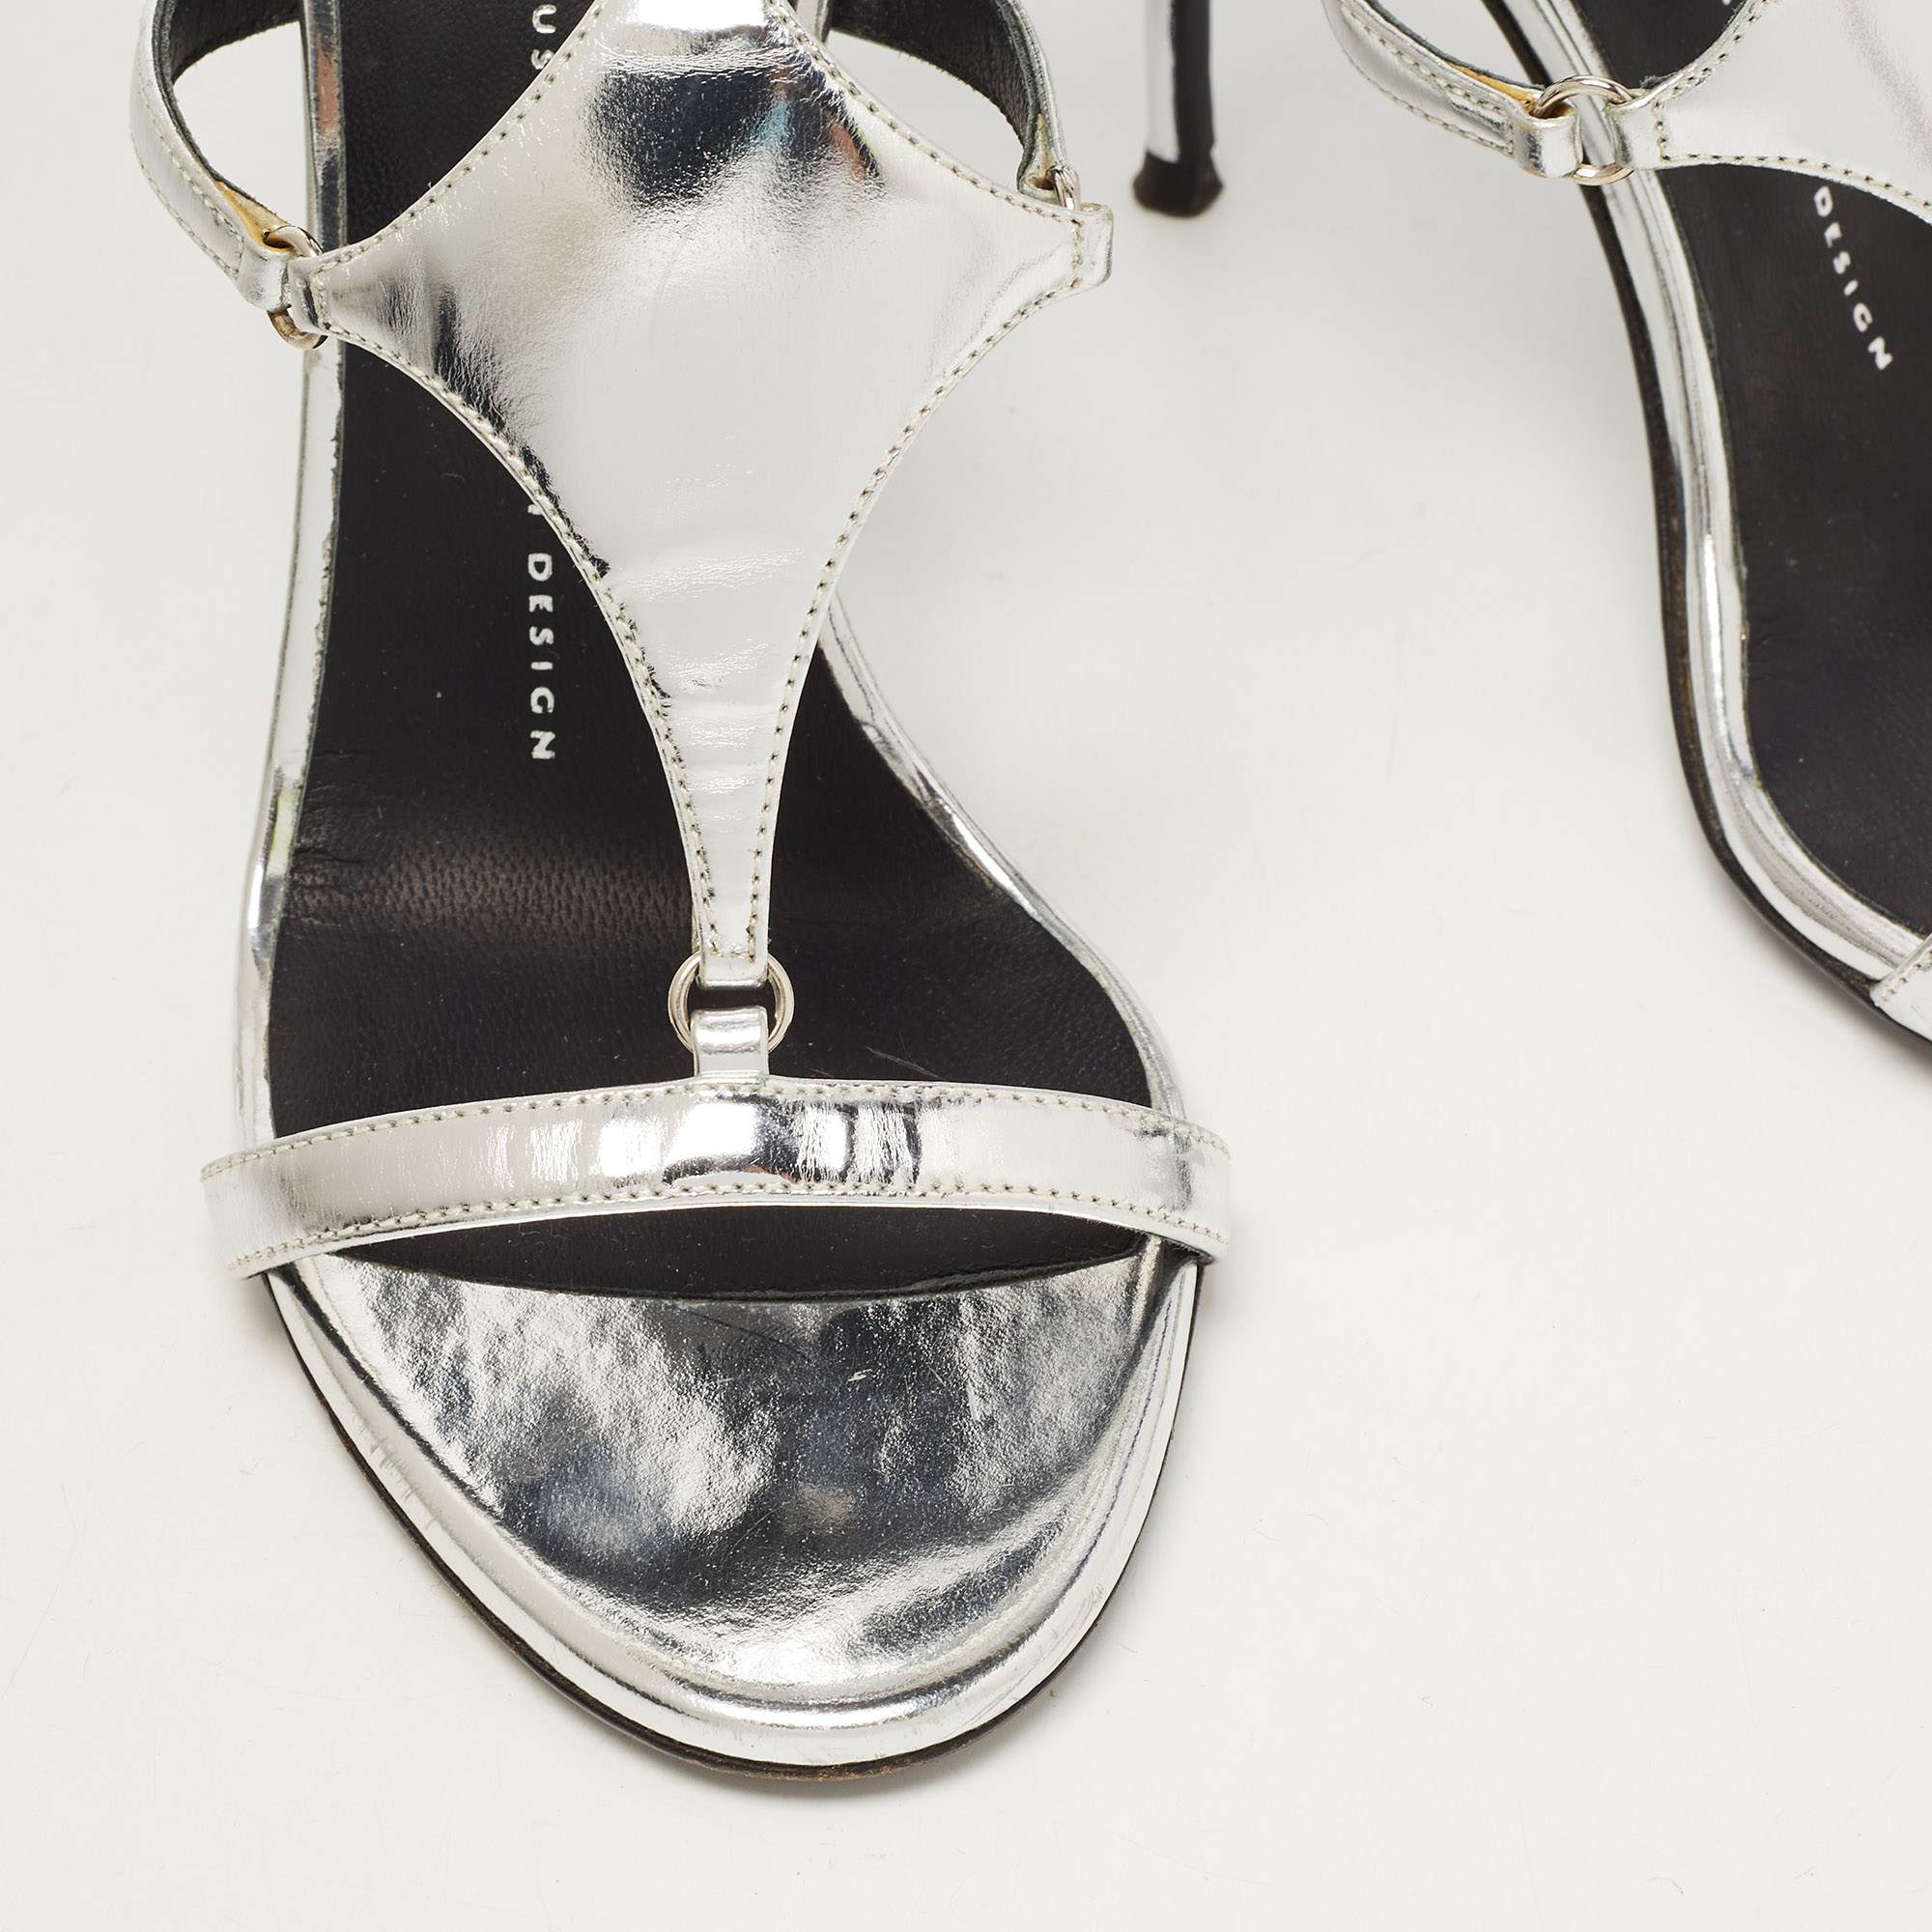 Giuseppe Zanotti Metallic Silver Leather Strappy Sandals Size 37.5